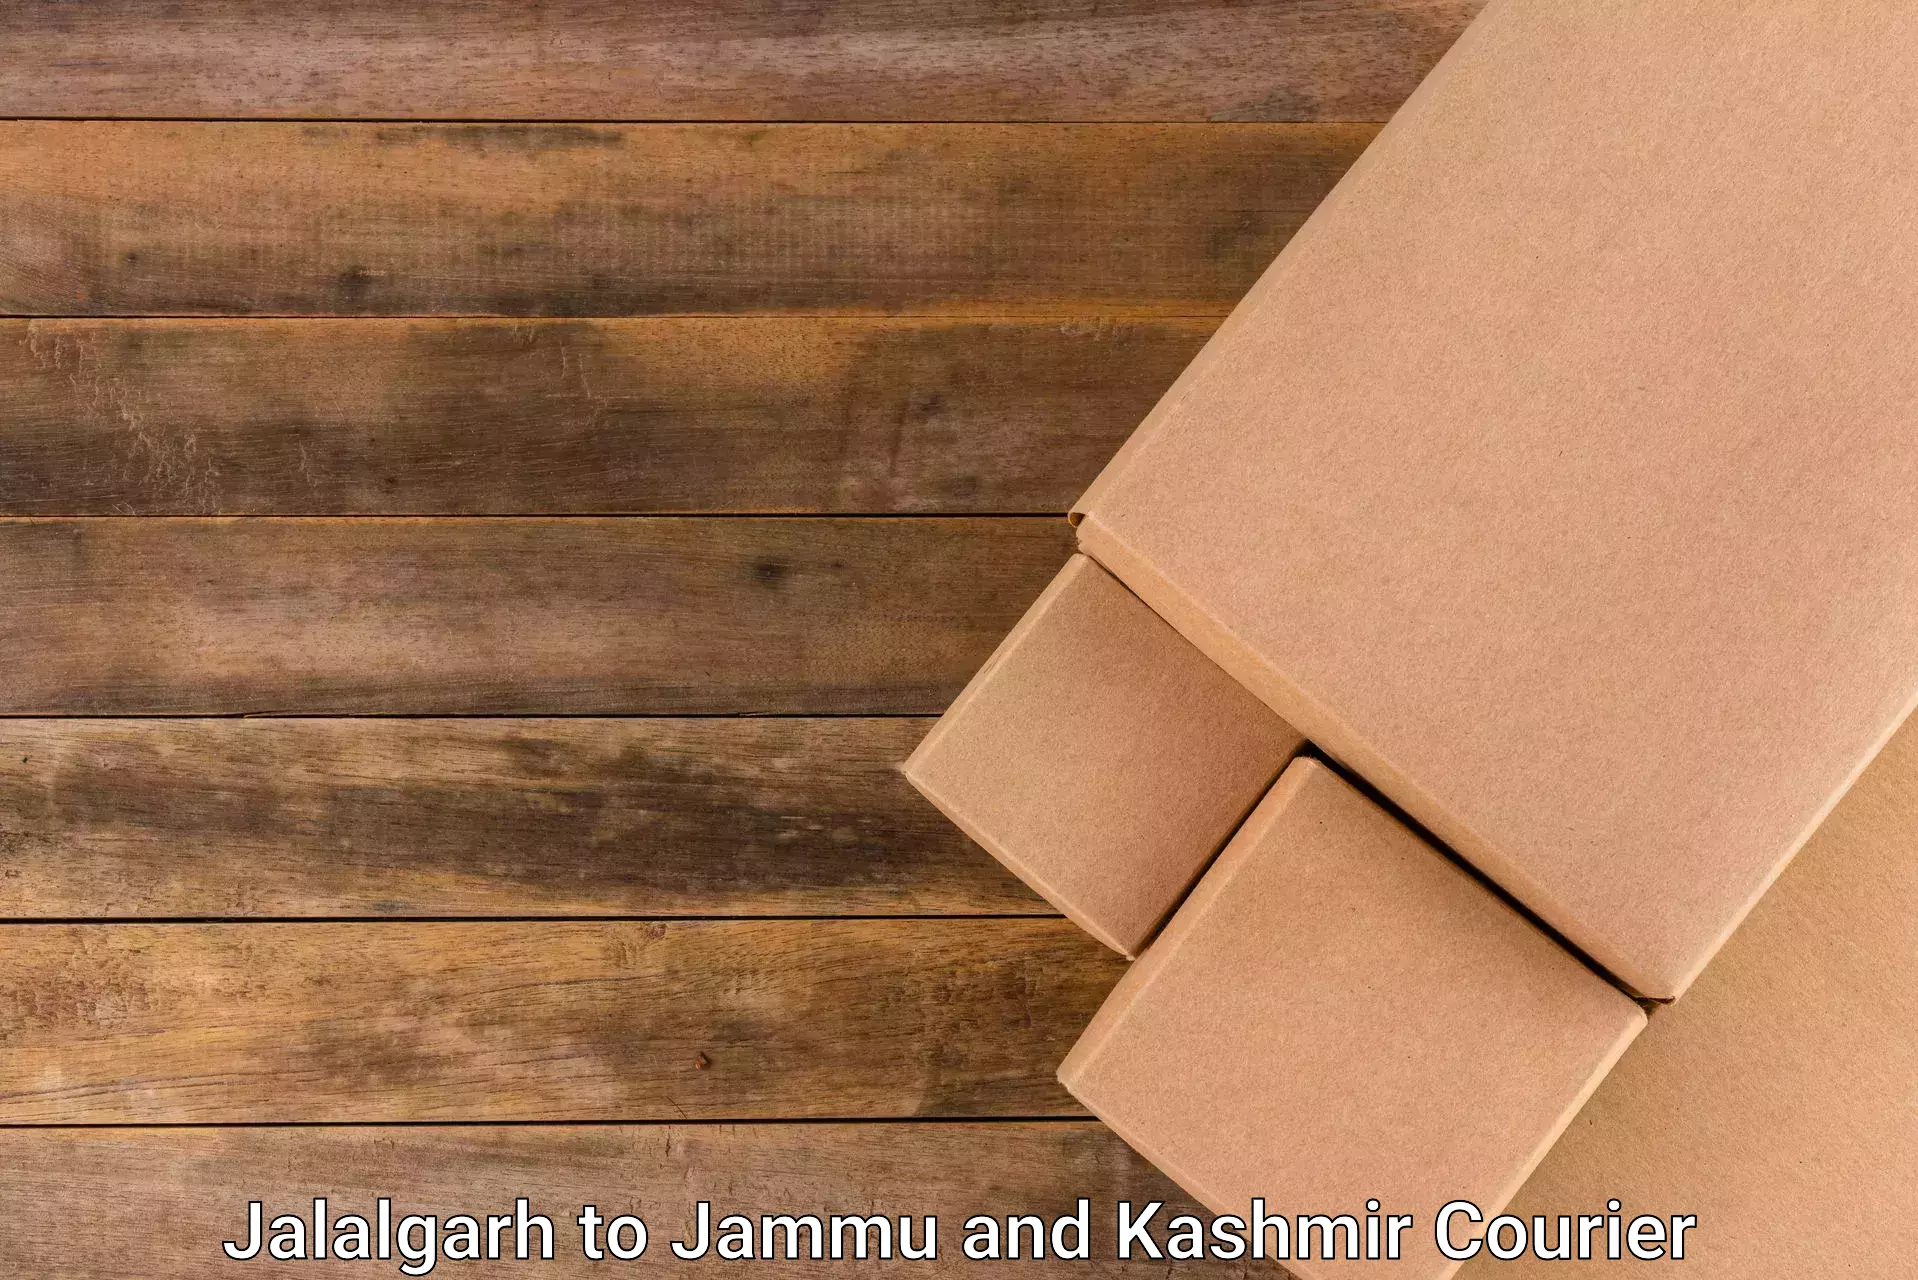 Courier service partnerships in Jalalgarh to Hiranagar